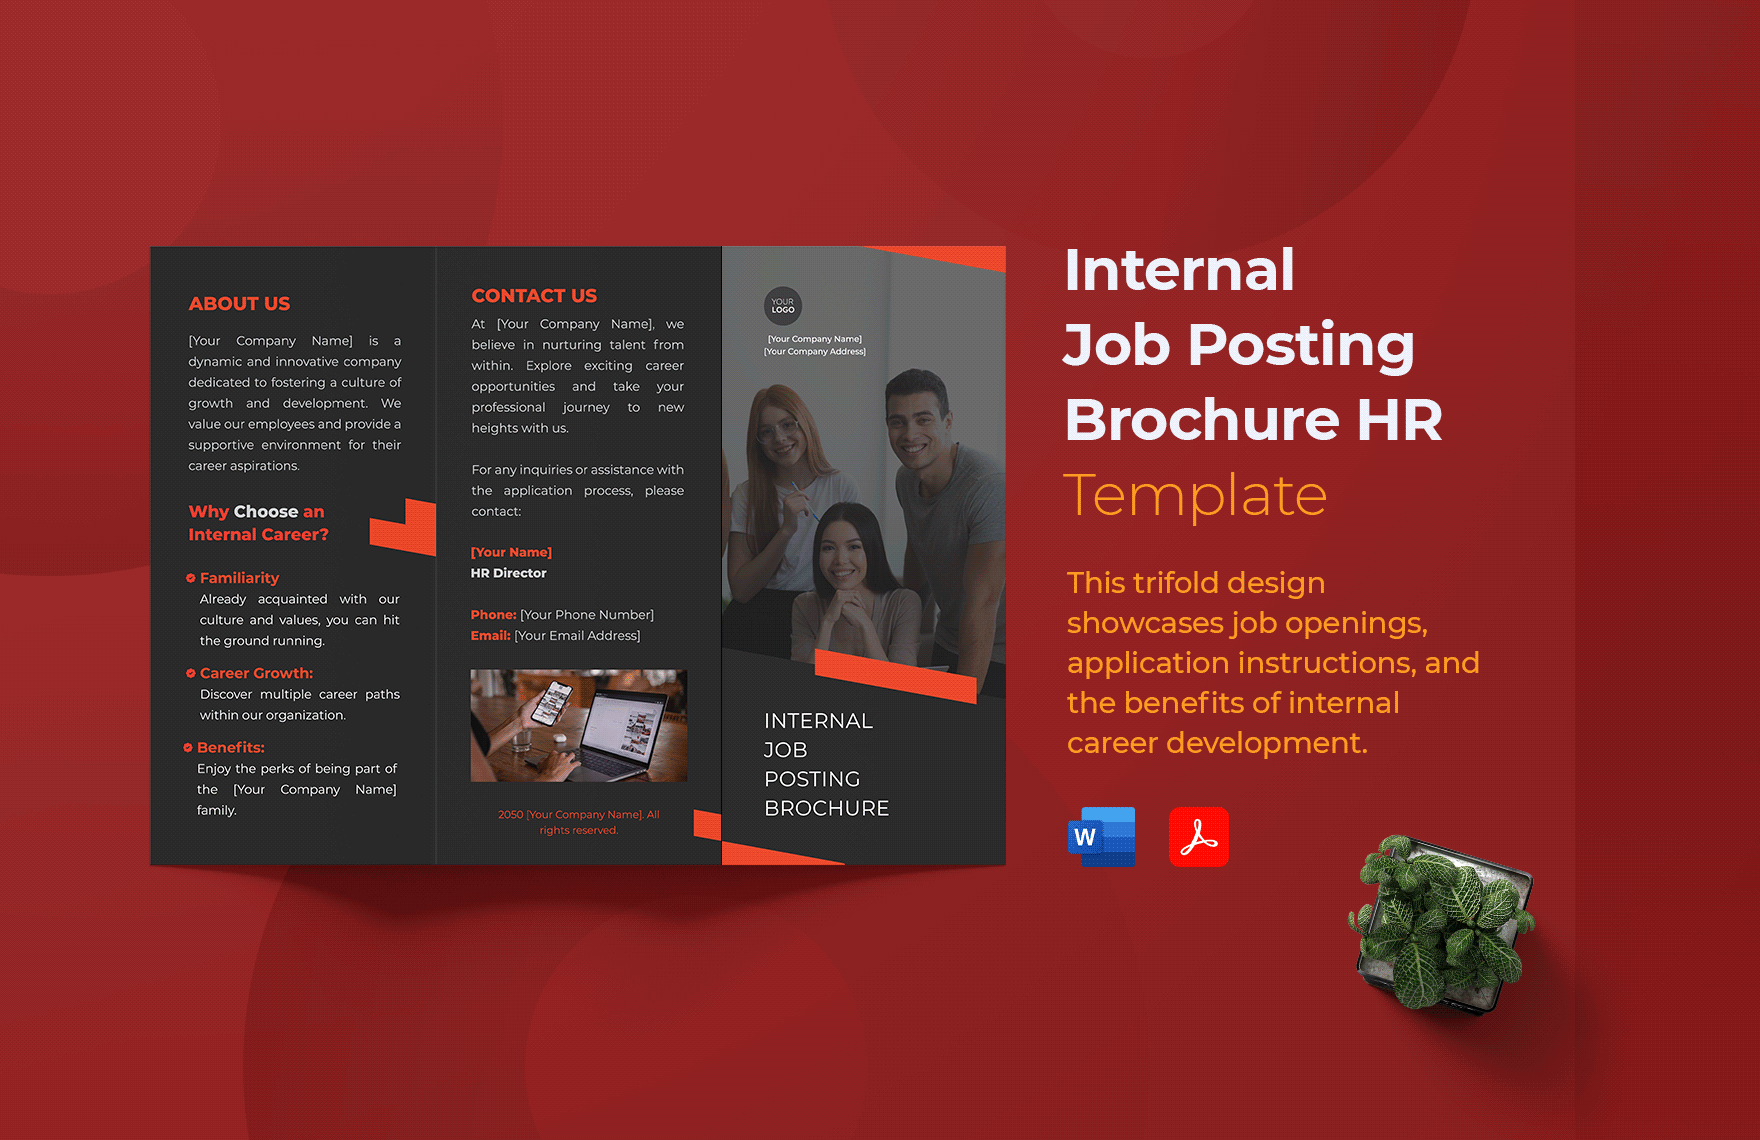 Internal Job Posting Brochure HR Template